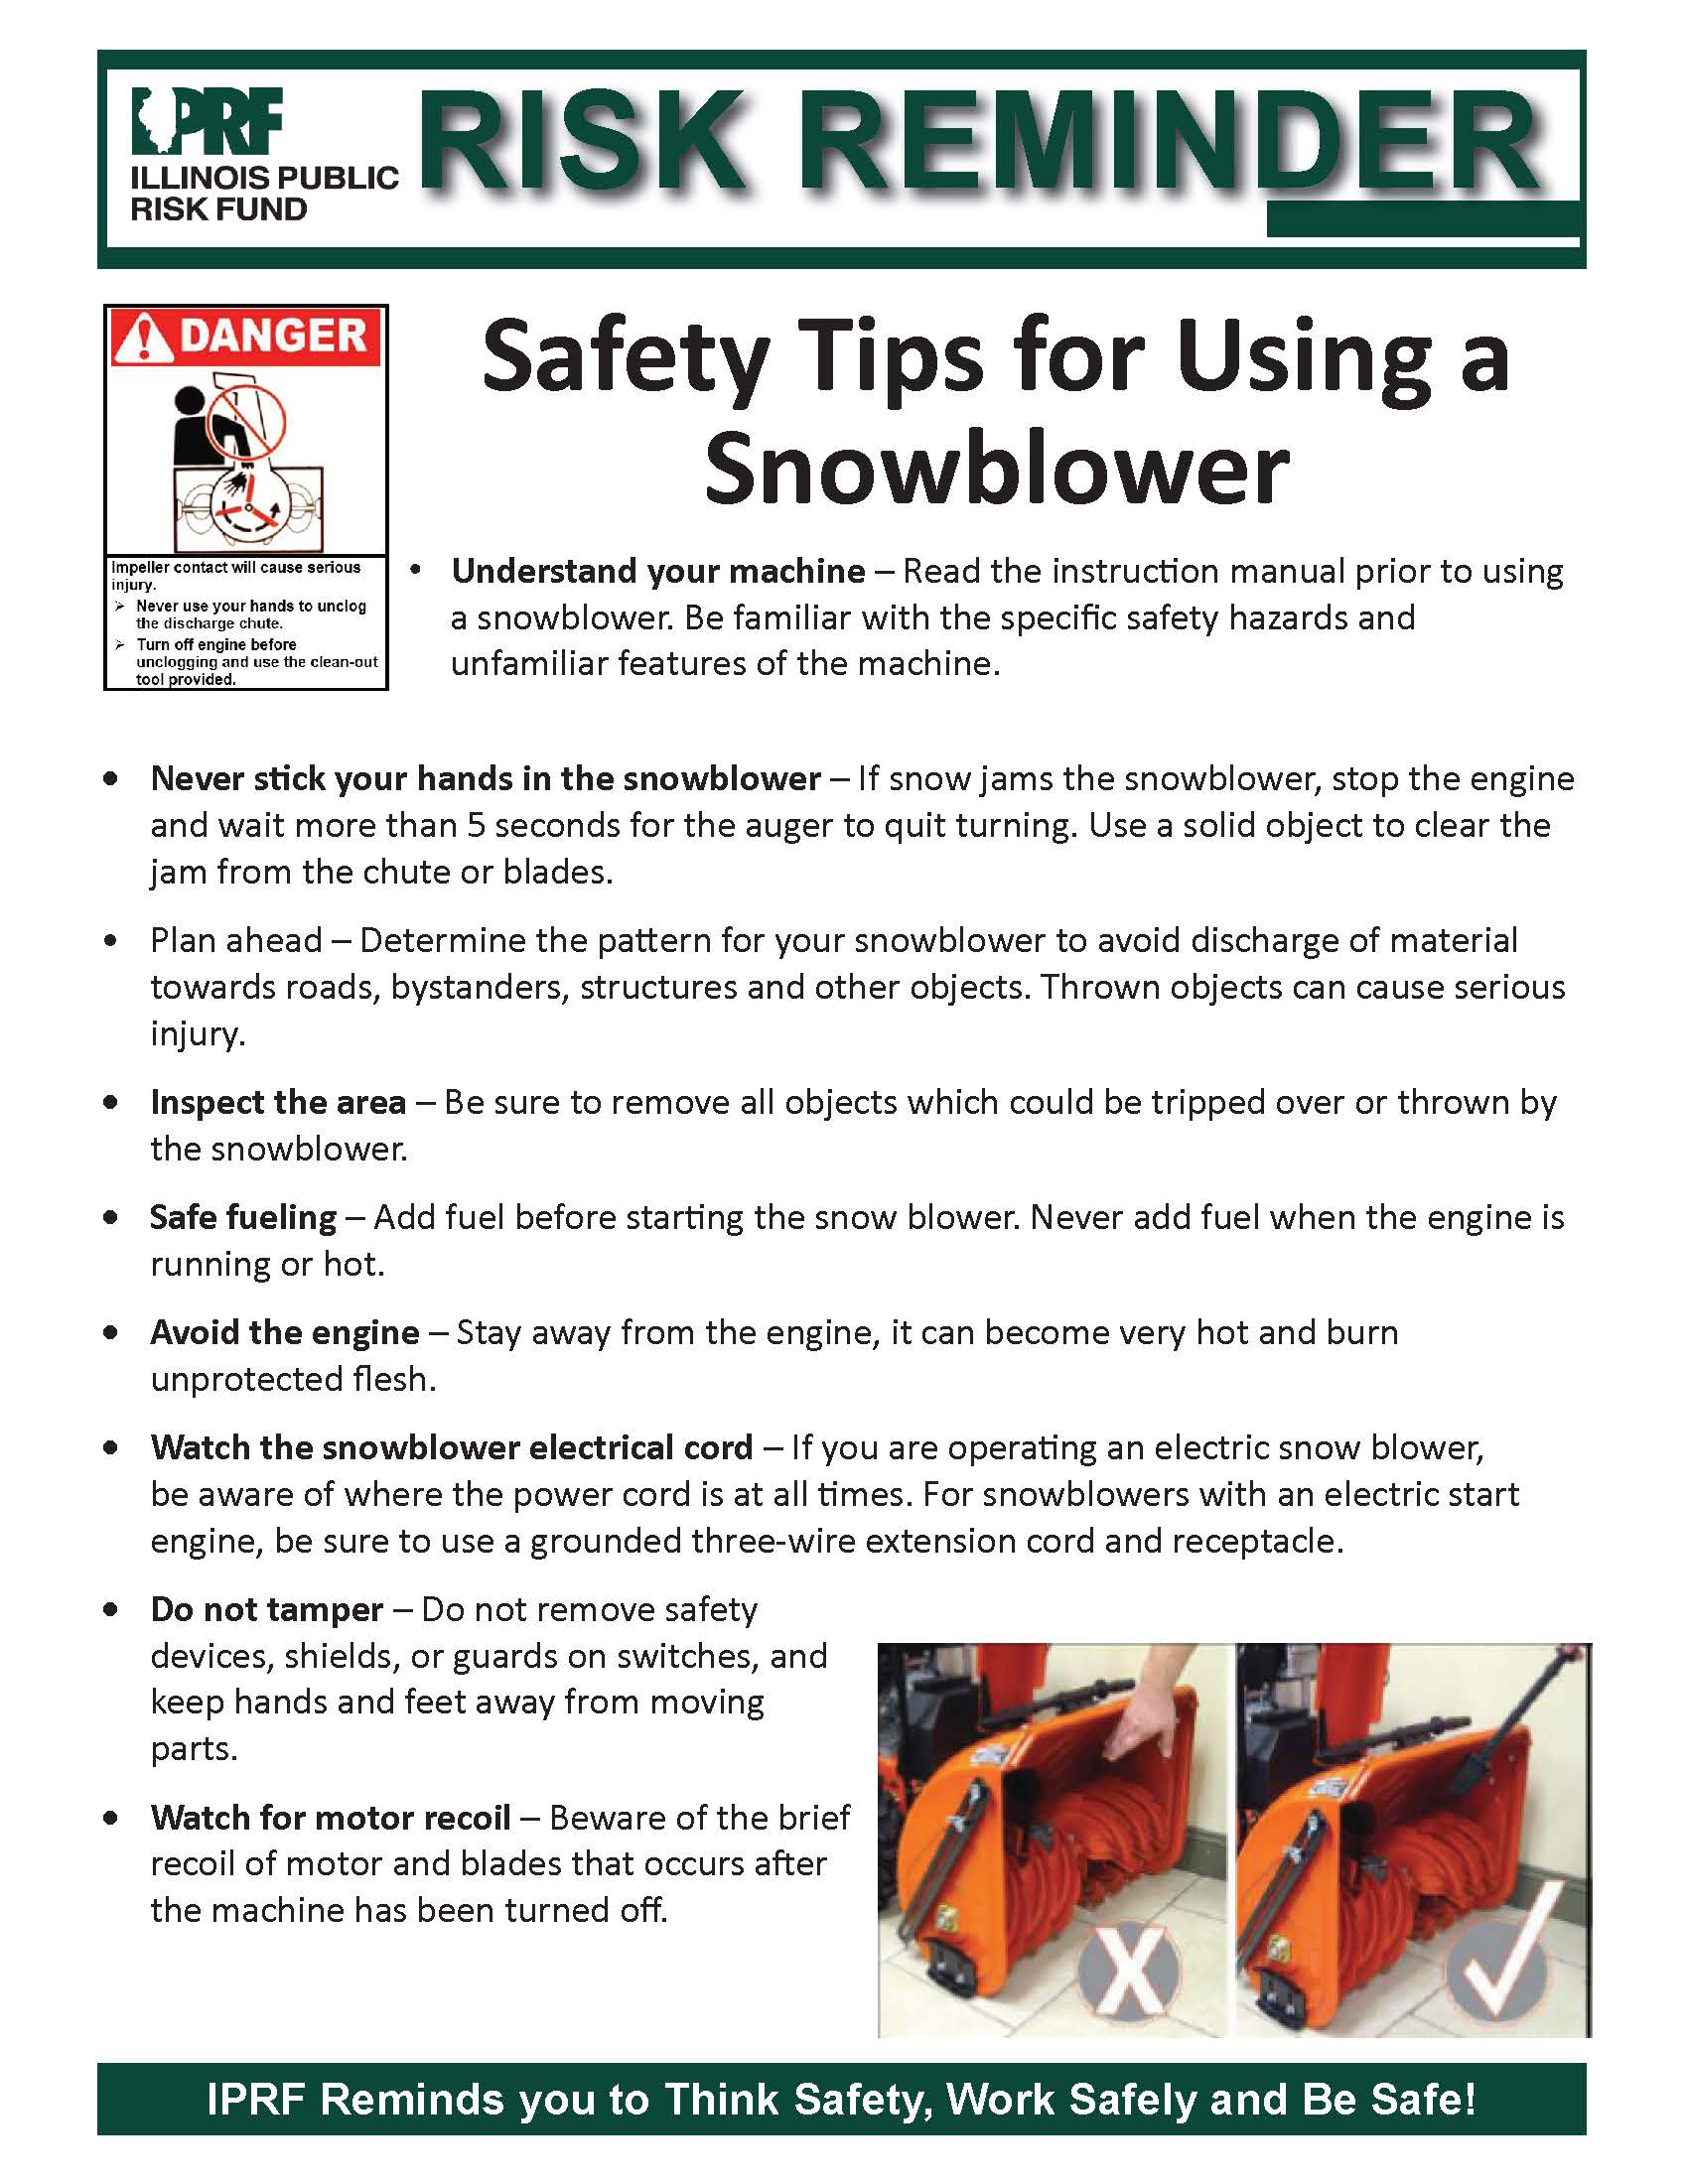 iprf_snowblower-safety-tips